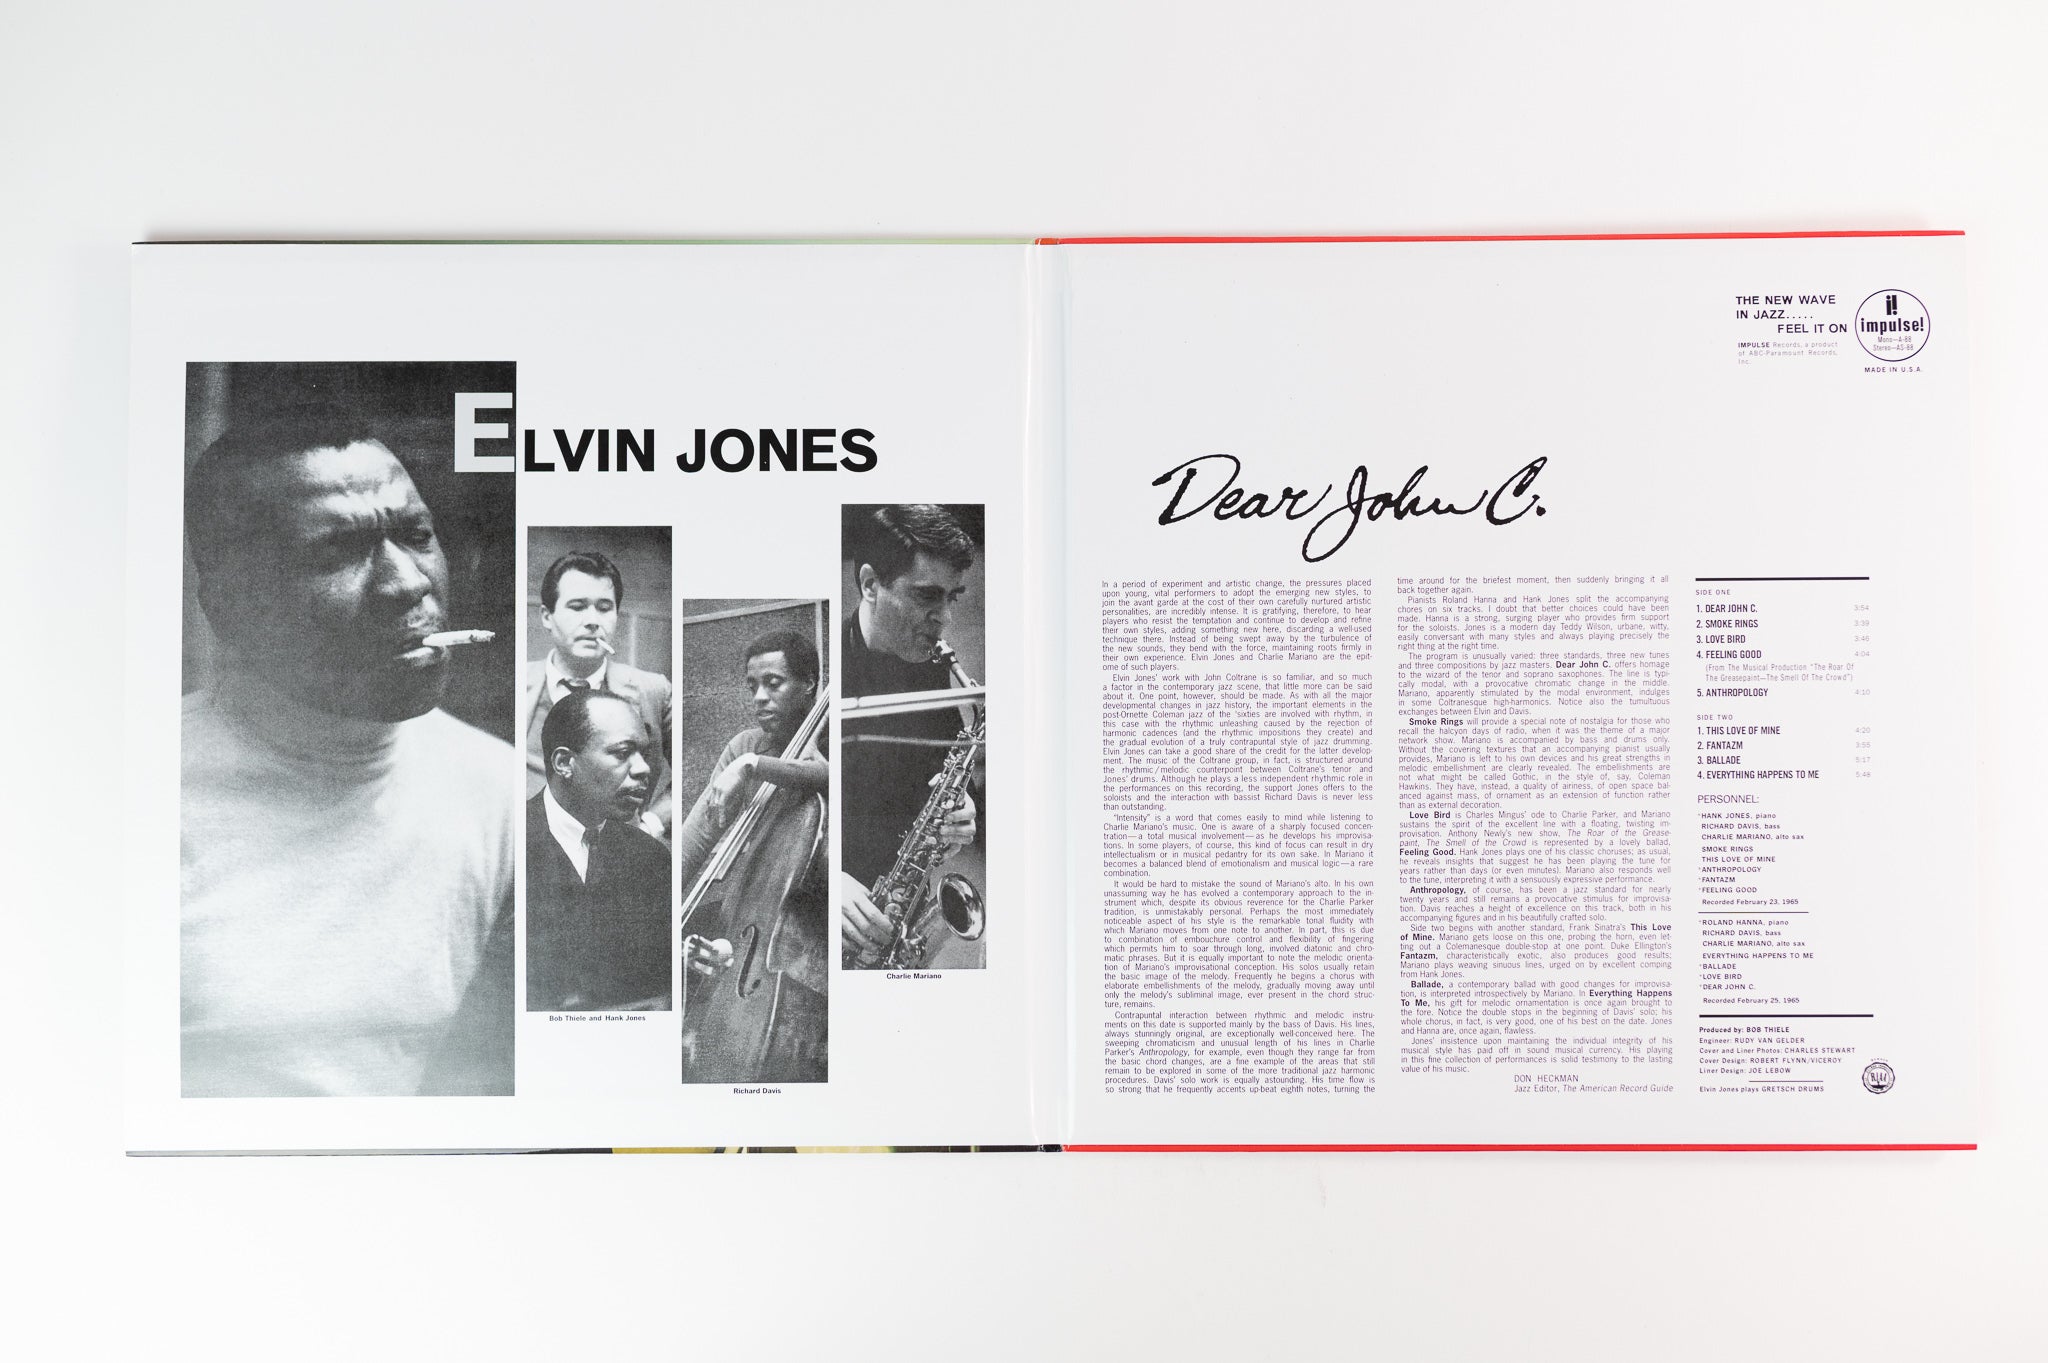 Elvin Jones - Dear John C. on Impulse Analogue Productions Ltd Numbered 45 RPM Reissue